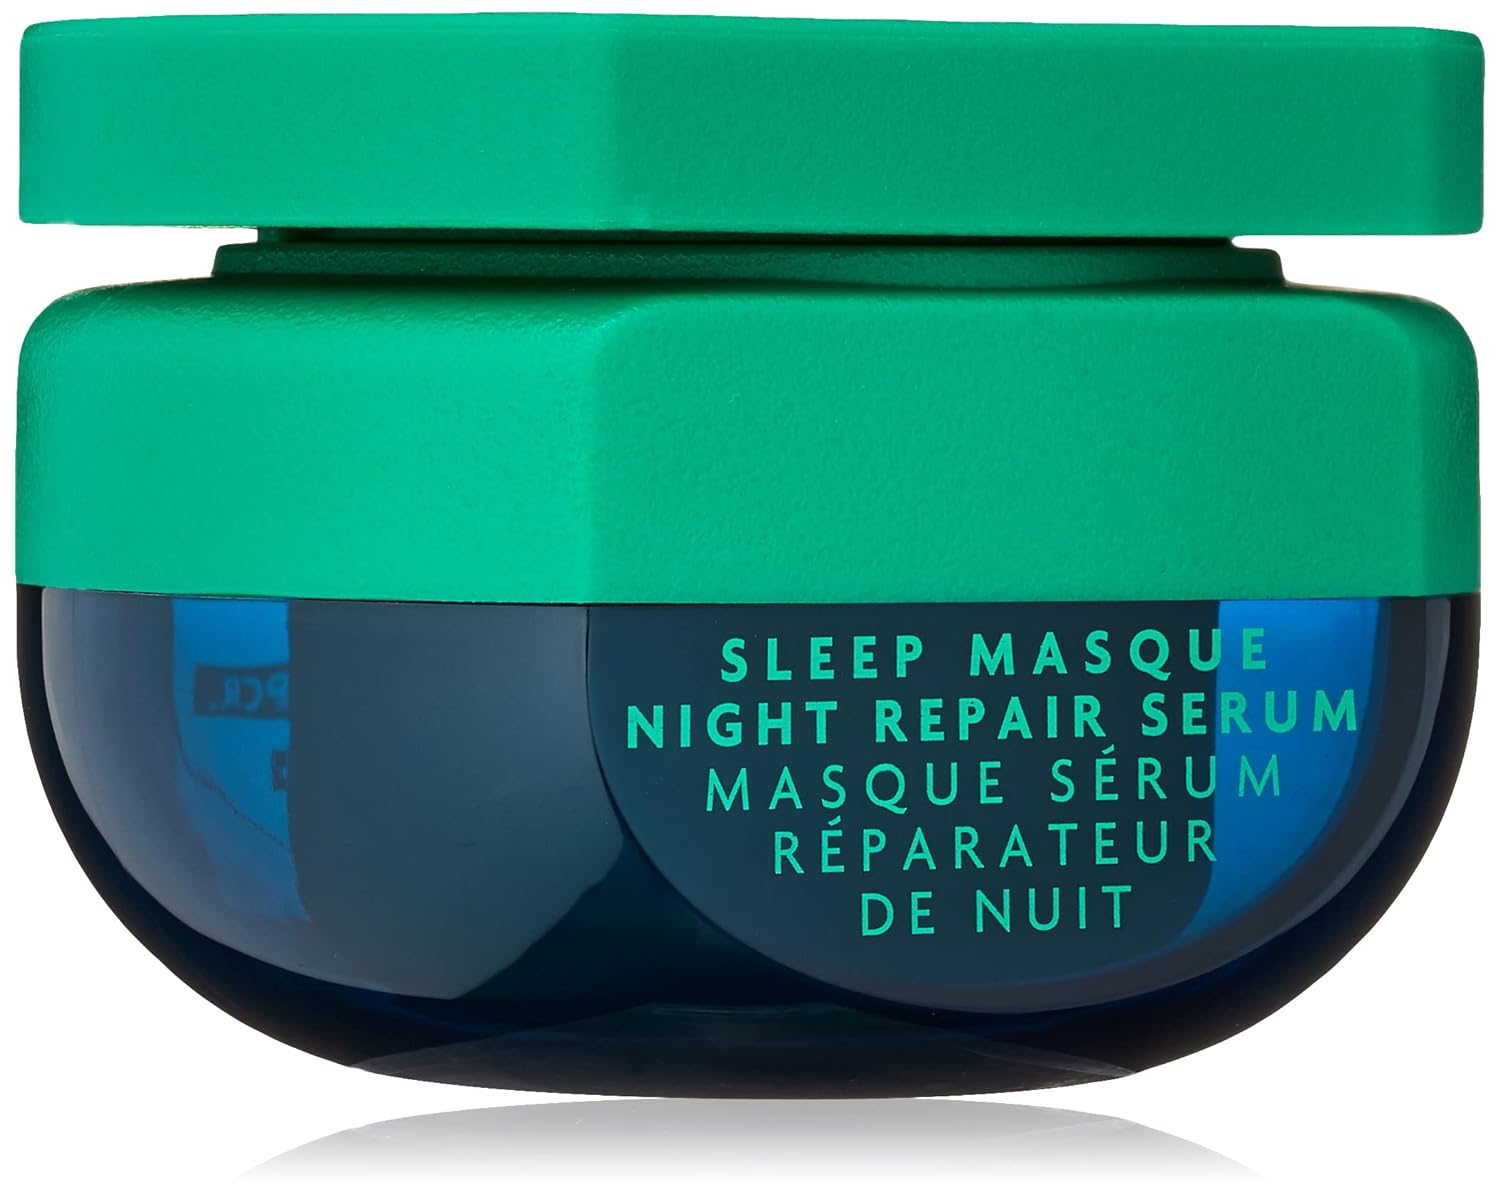 R+Co BLEU Sleep Masque Night Repair Serum | Overnight Hair Repair + Nourishes + Revatilizes | Vegan, Sustainable + Cruelty-Free | 2